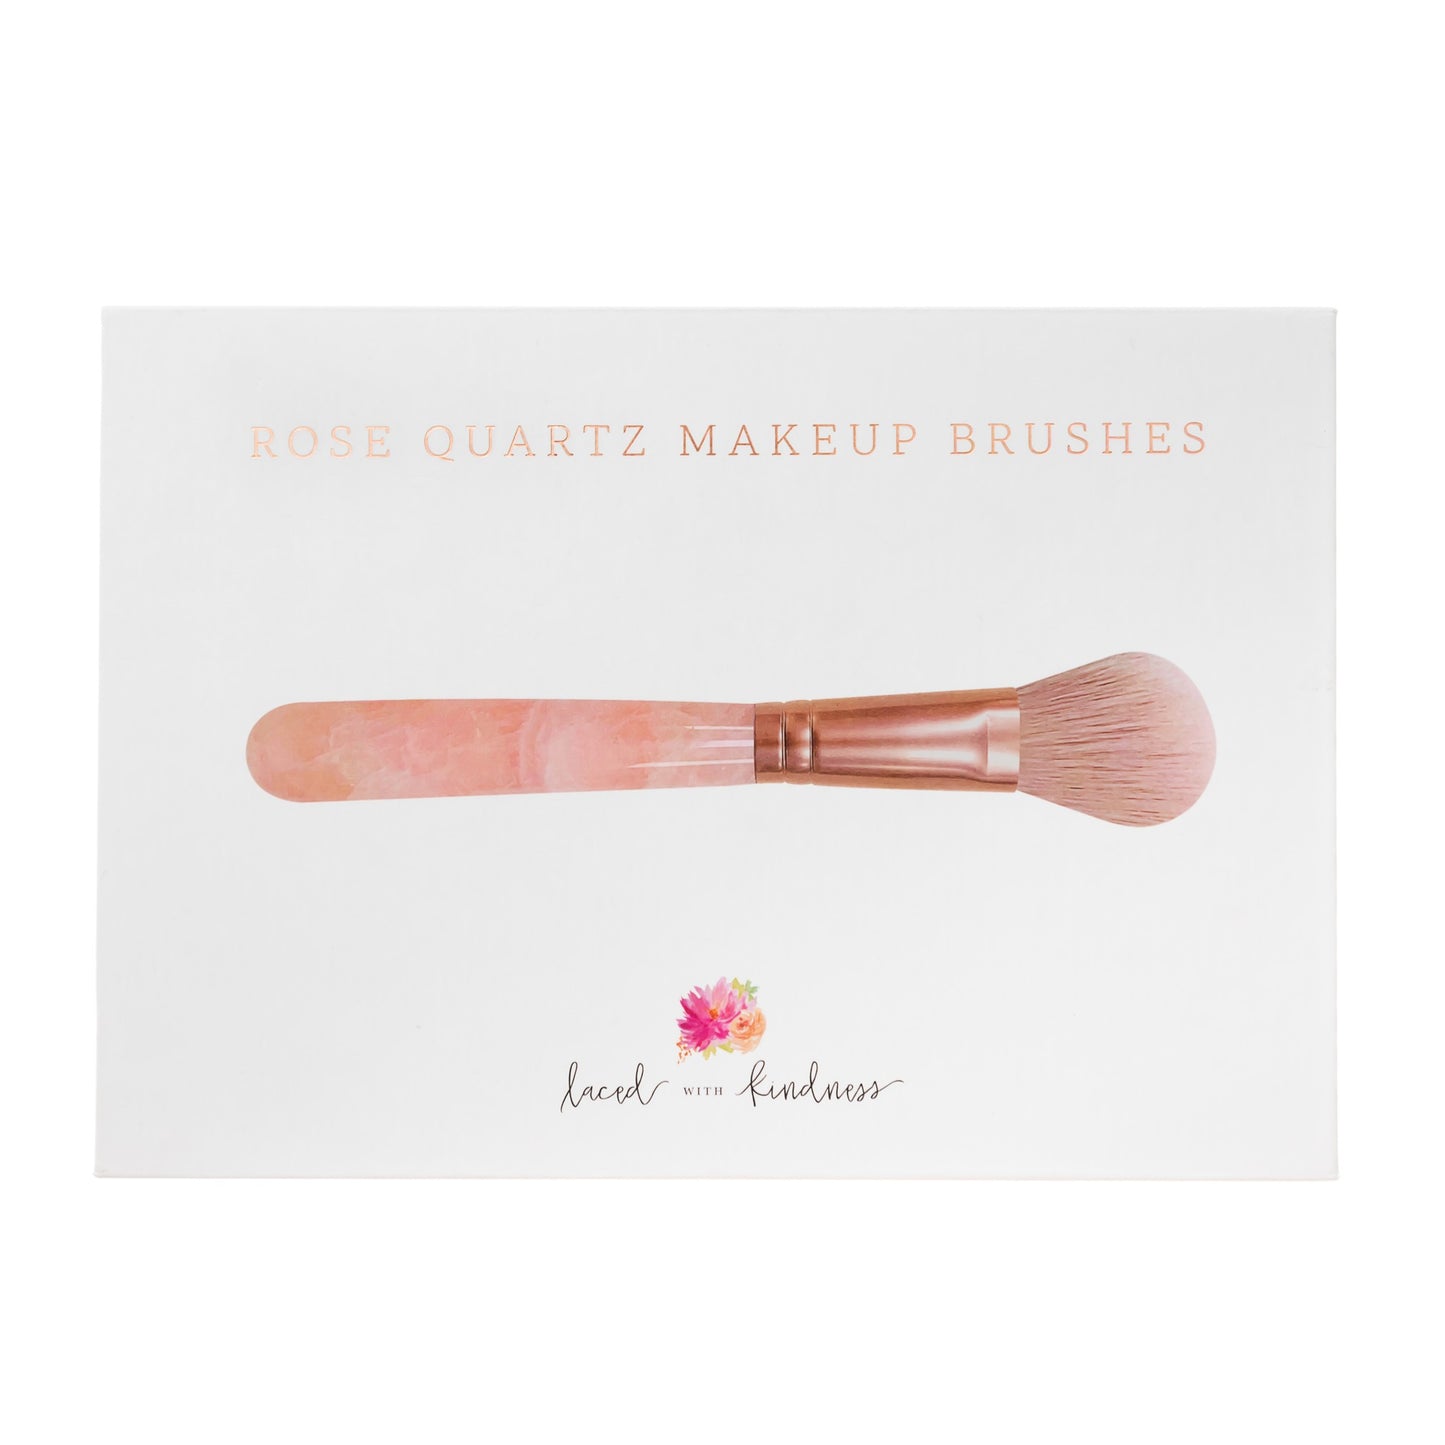 Rose Quartz soft makeup brush set, Australian brush